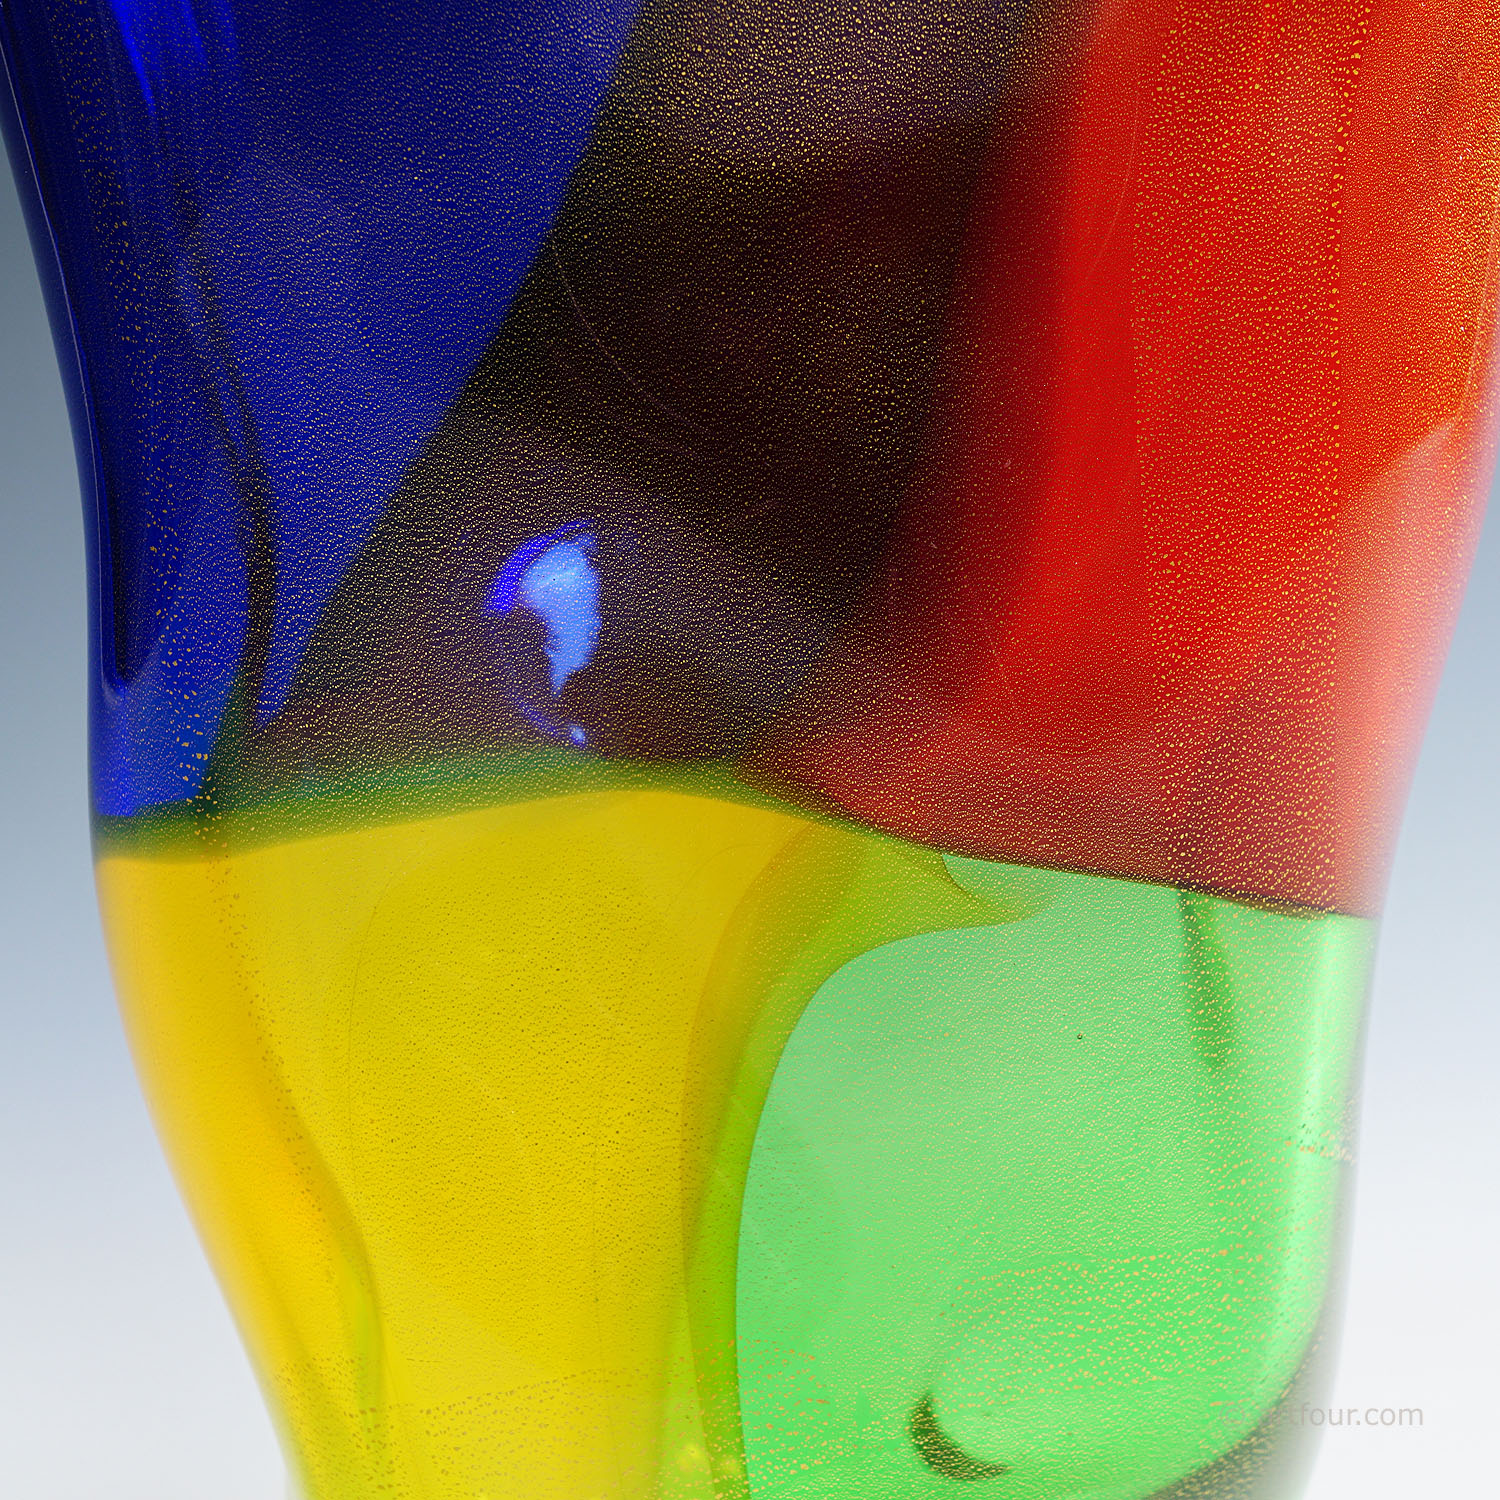 Vintage Art Glass Vase of the 4 Quarti Series by Seguso Viro